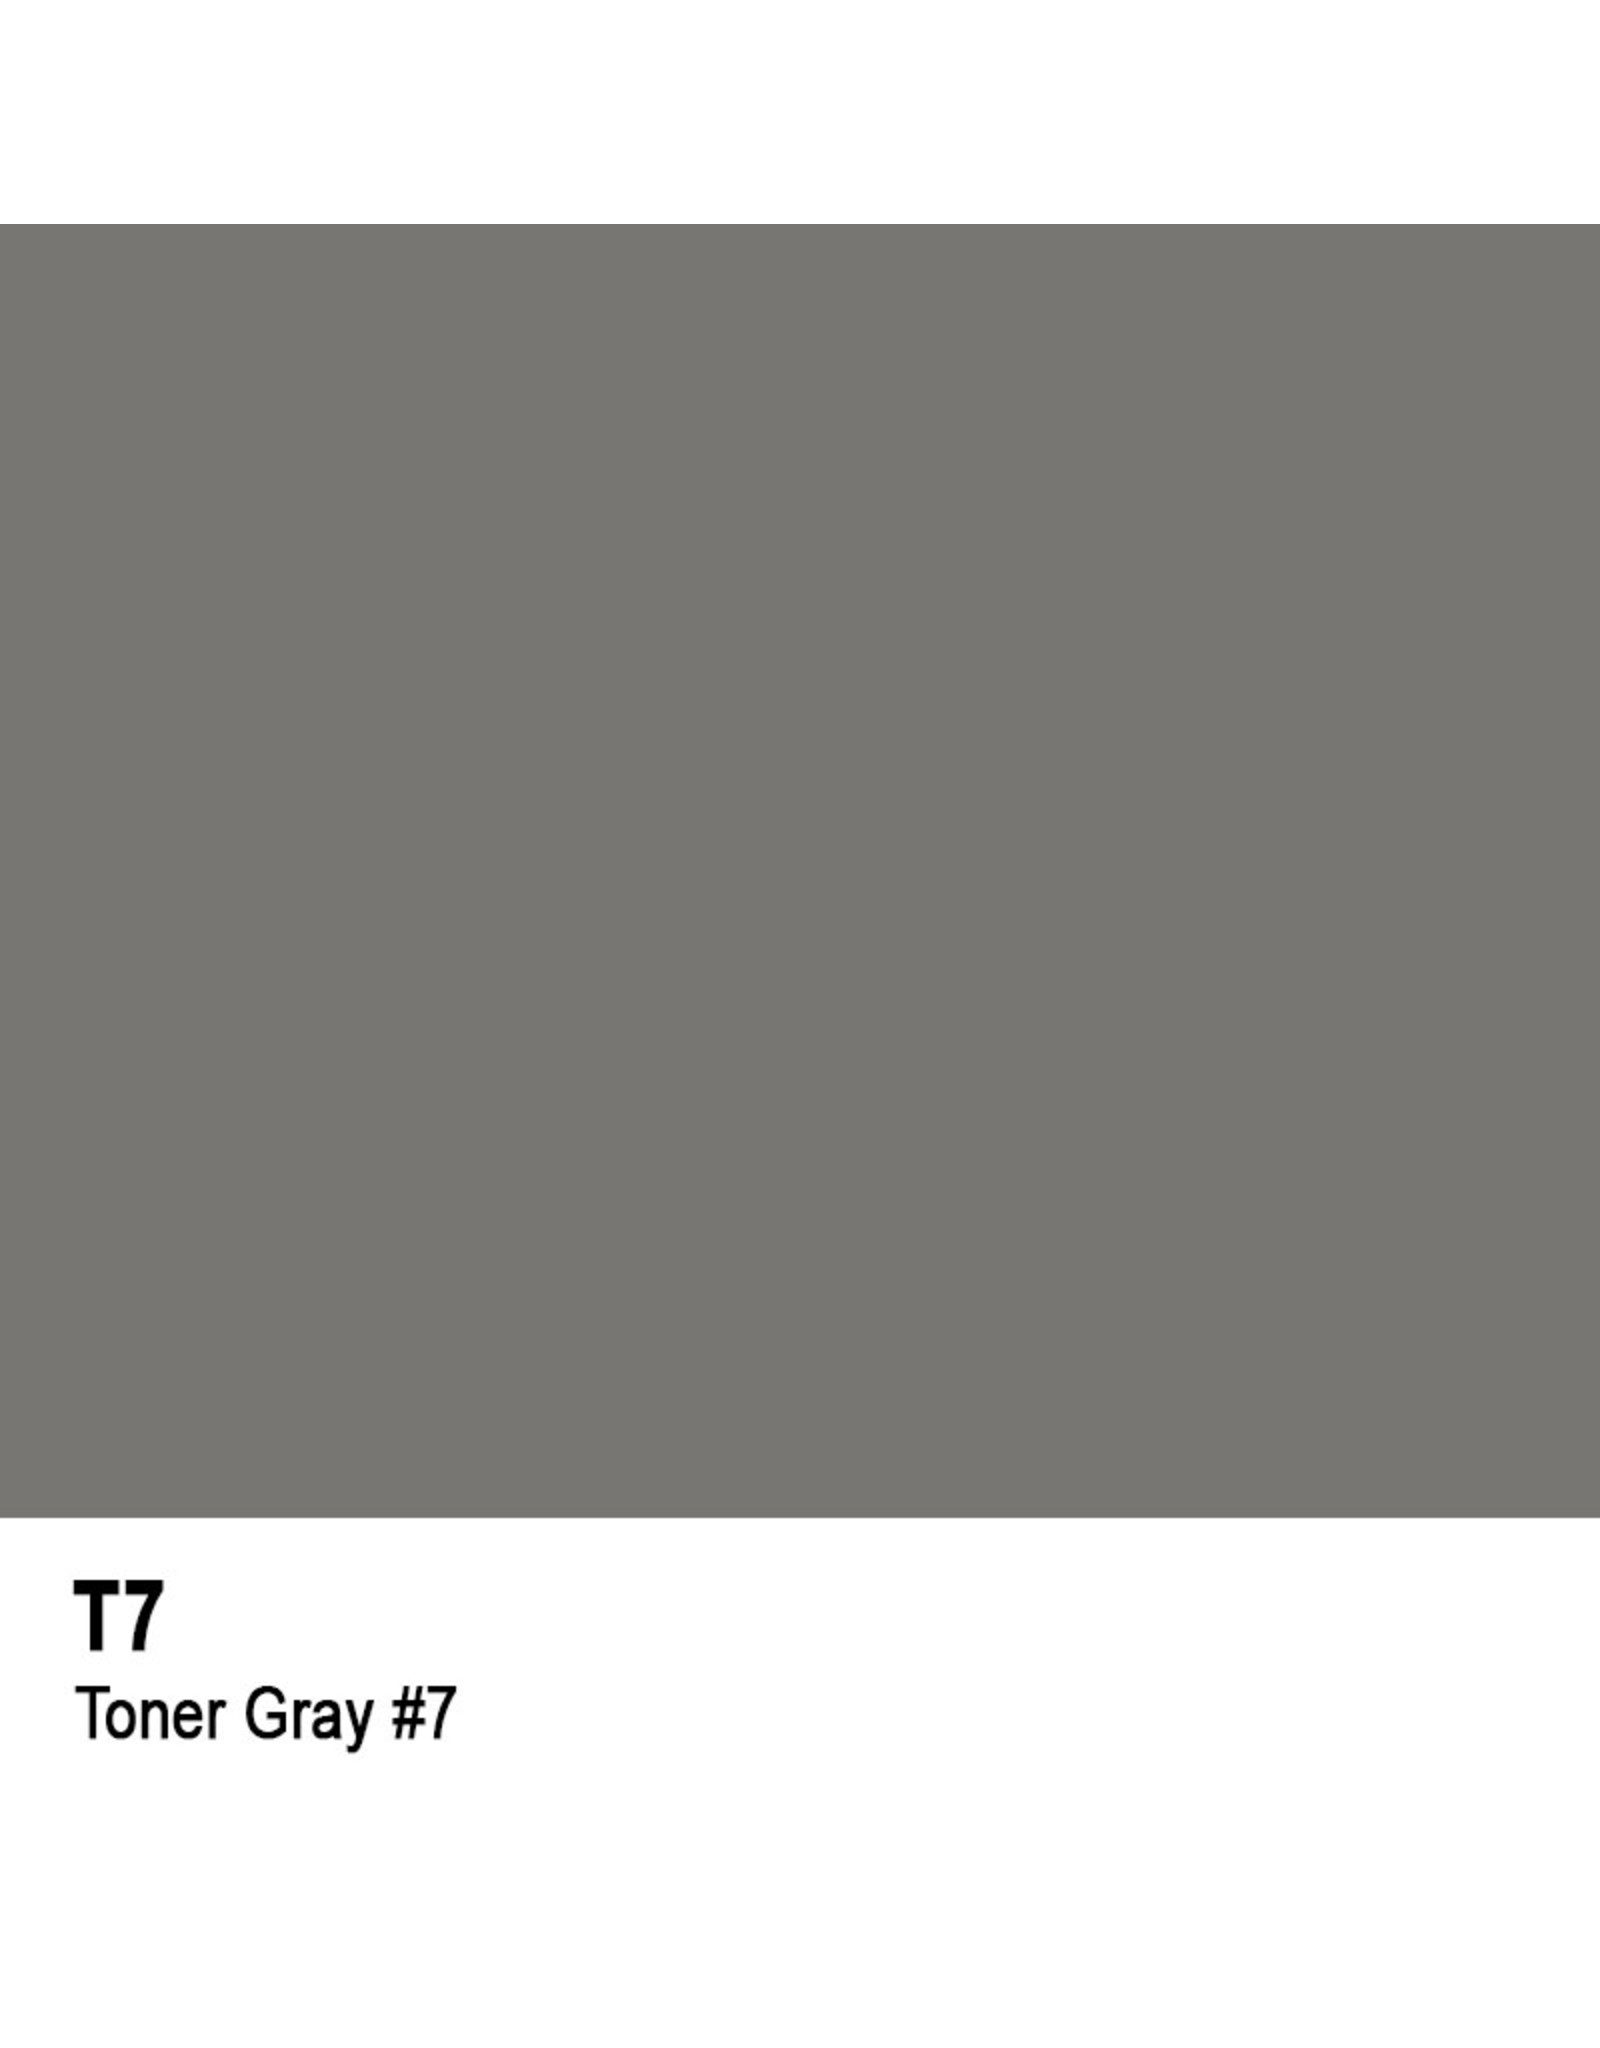 COPIC COPIC T7 TONER GREY #7 SKETCH MARKER